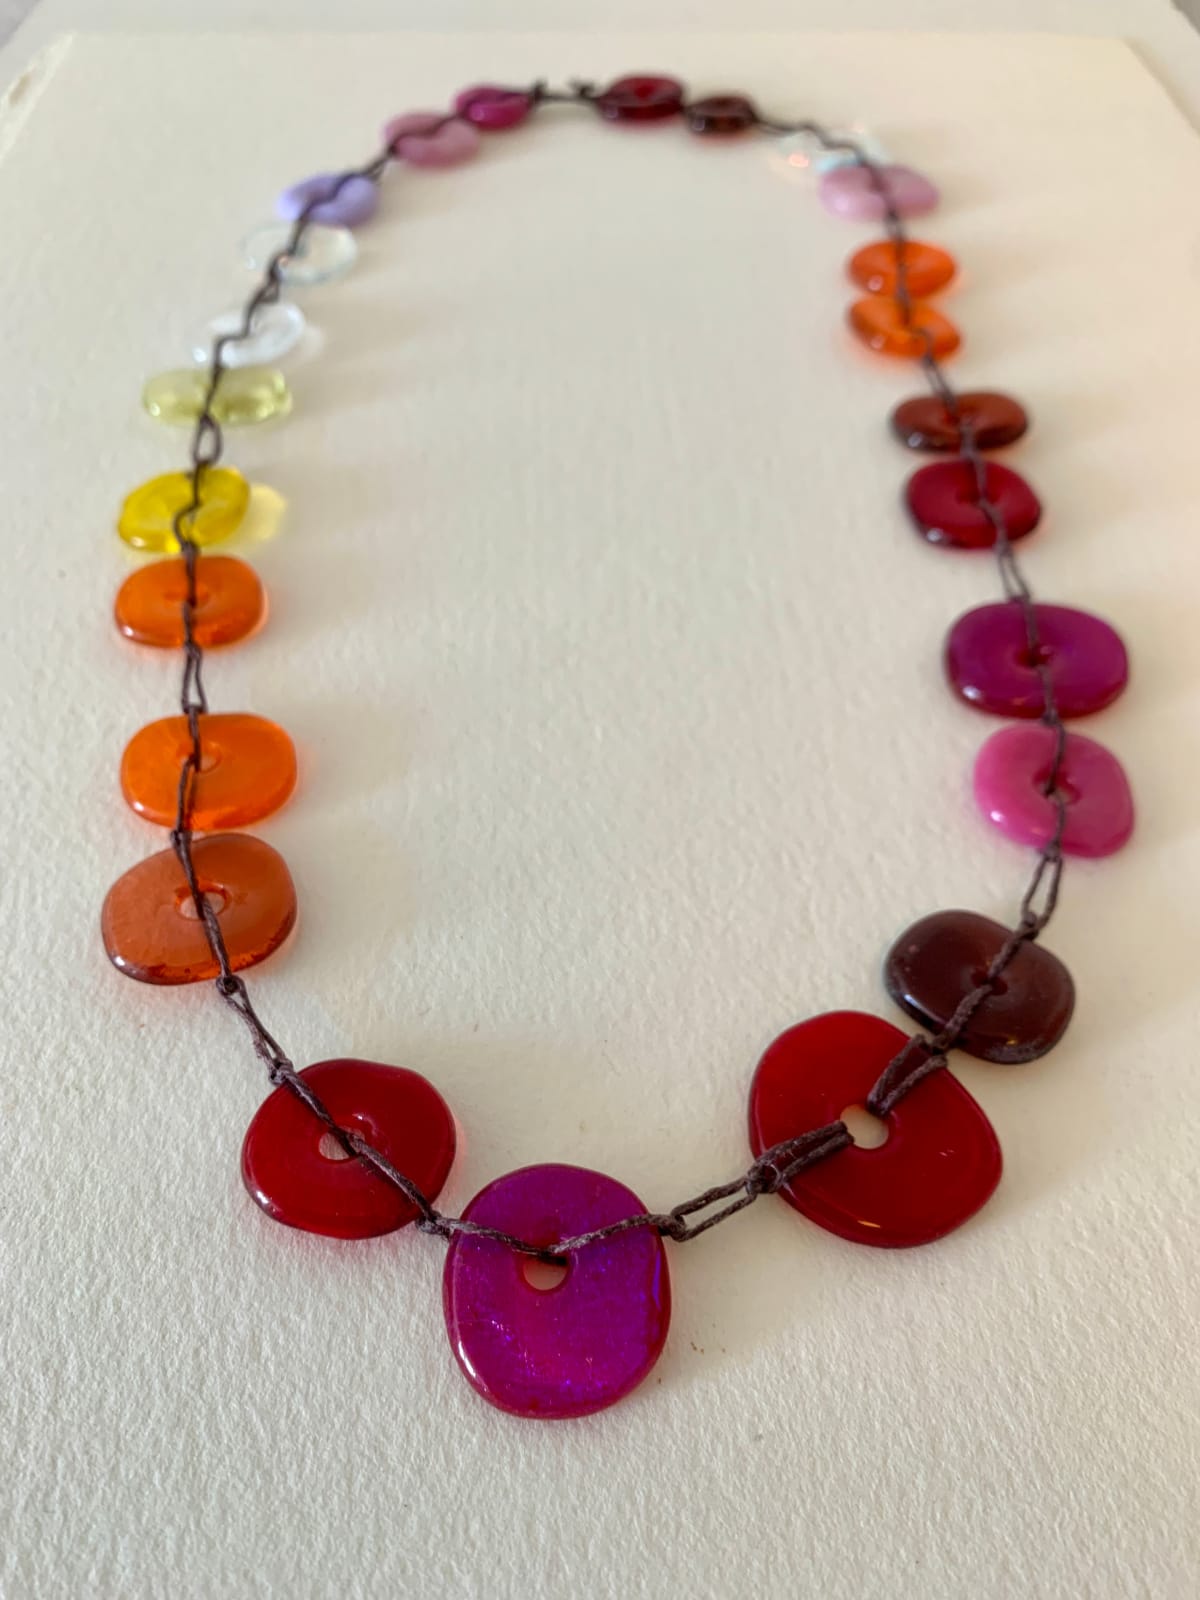 Kim Bramley SGS CGS, Colourscape Pebble Necklace